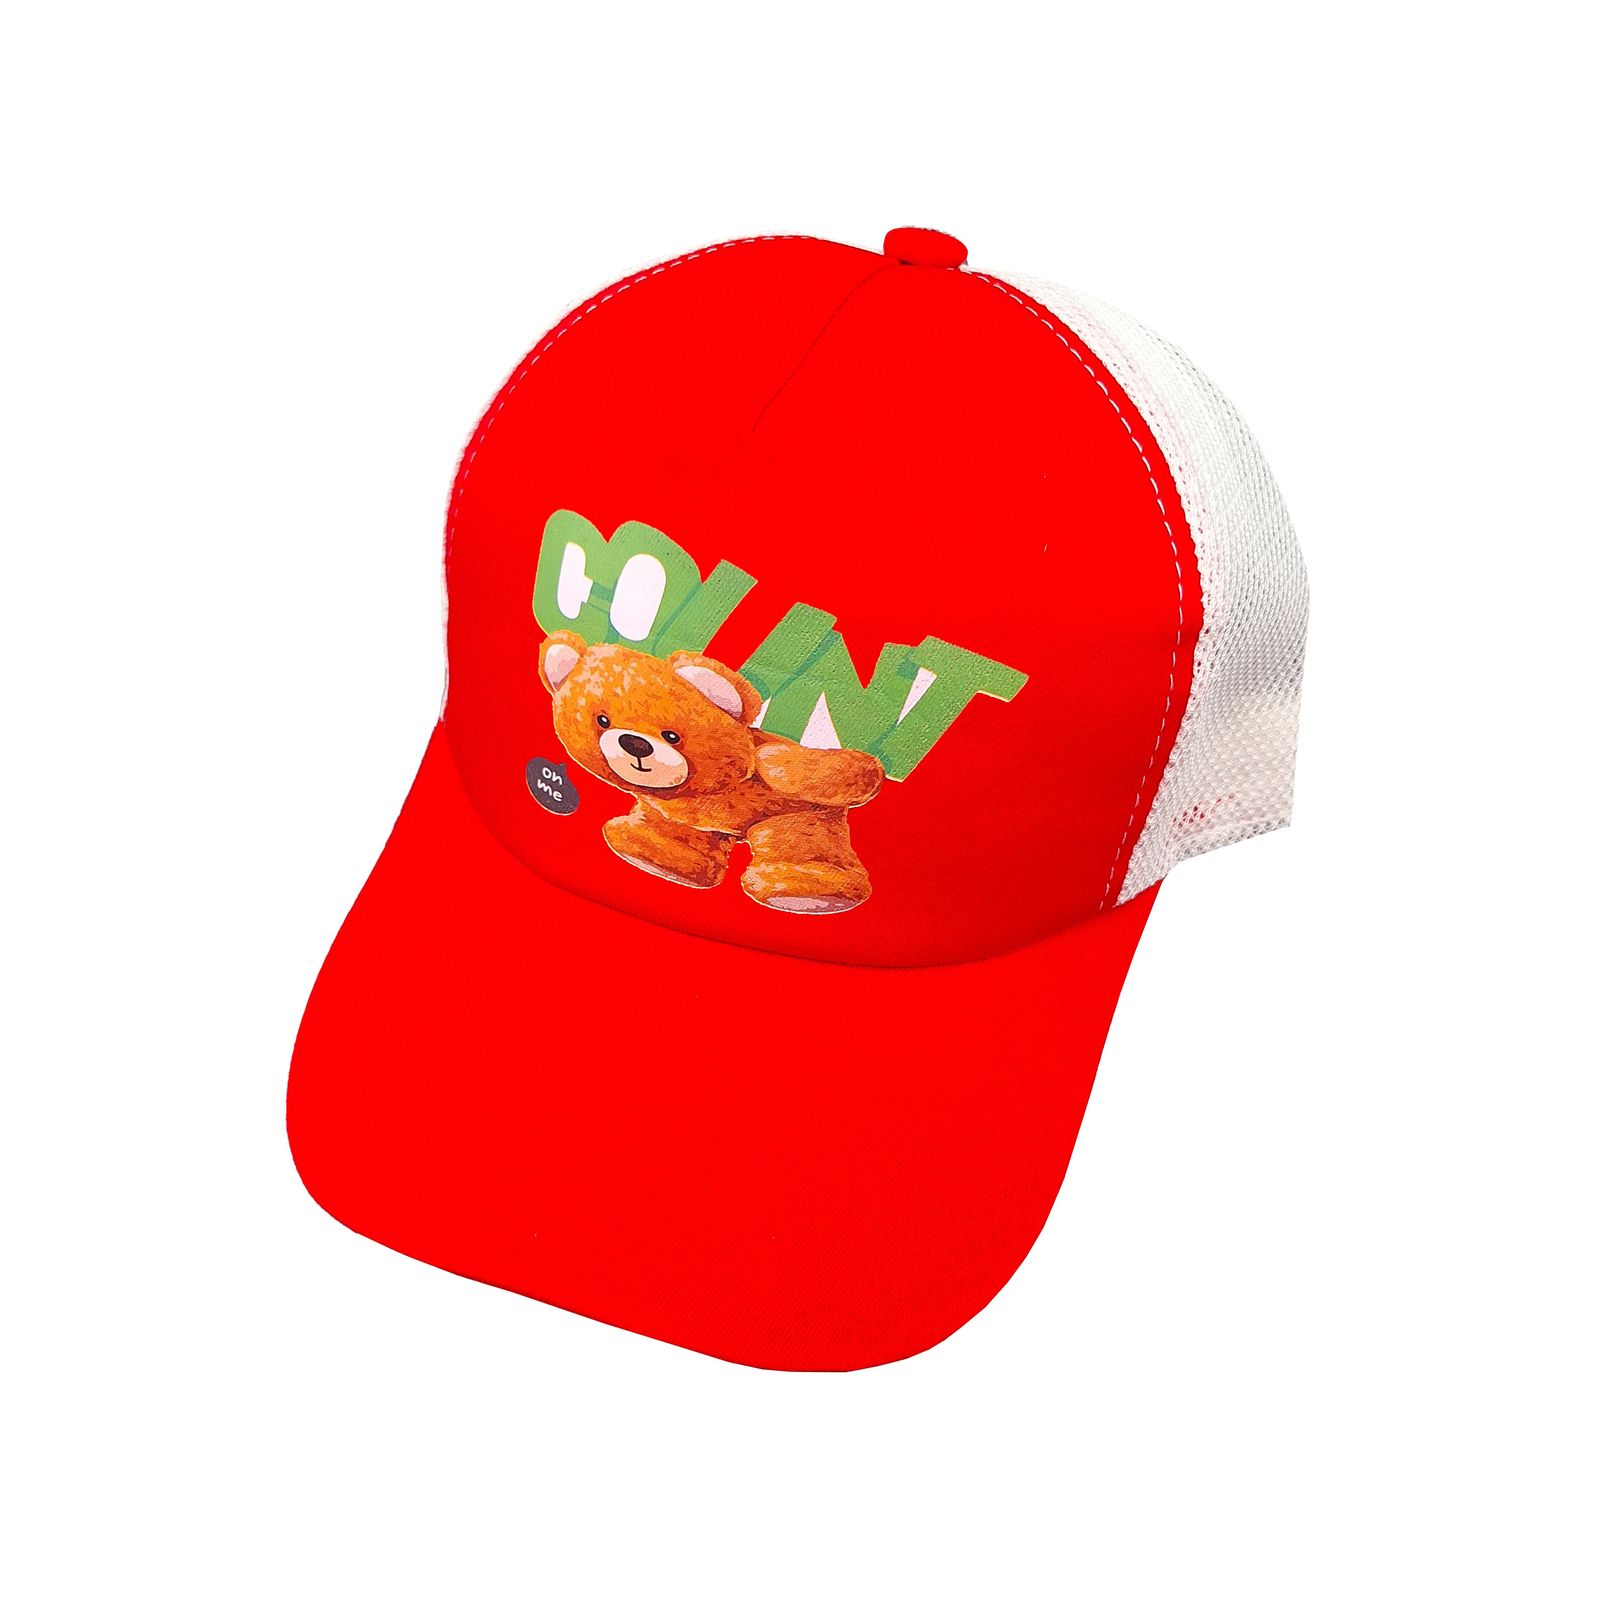 کلاه کپ بچگانه مدل COUNT کد 1212 رنگ قرمز -  - 1